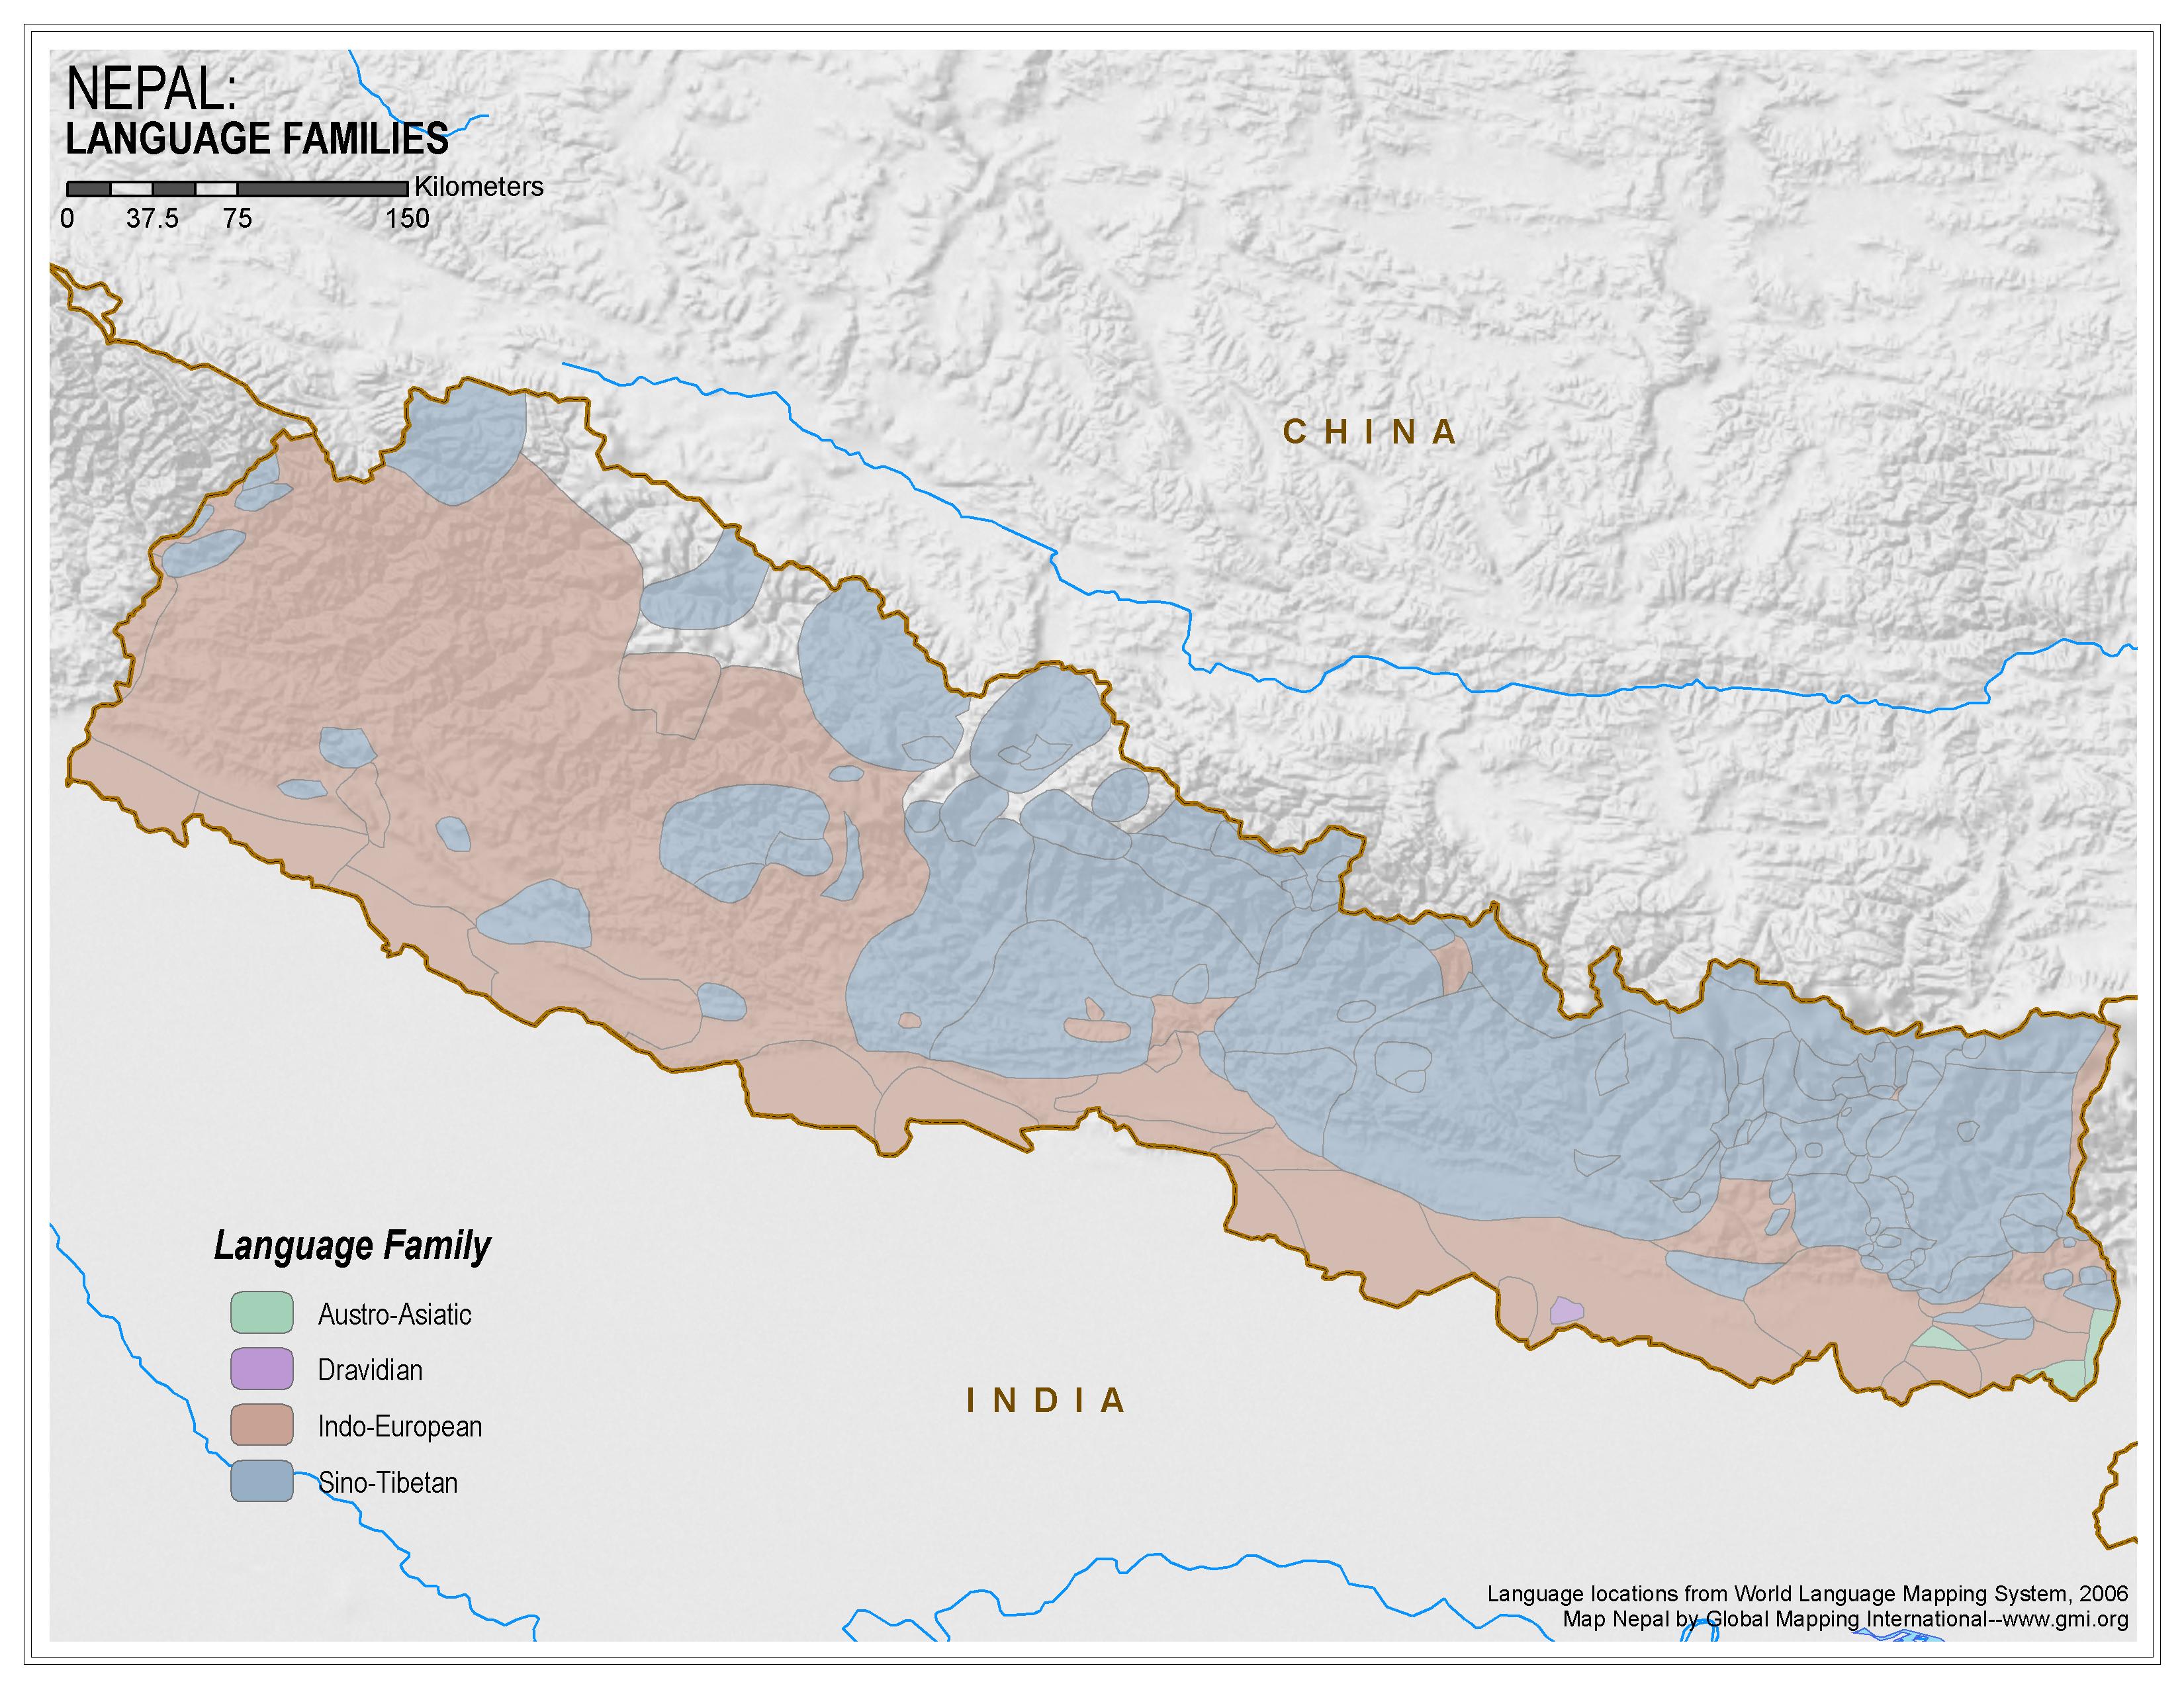 Nepal: Language Families